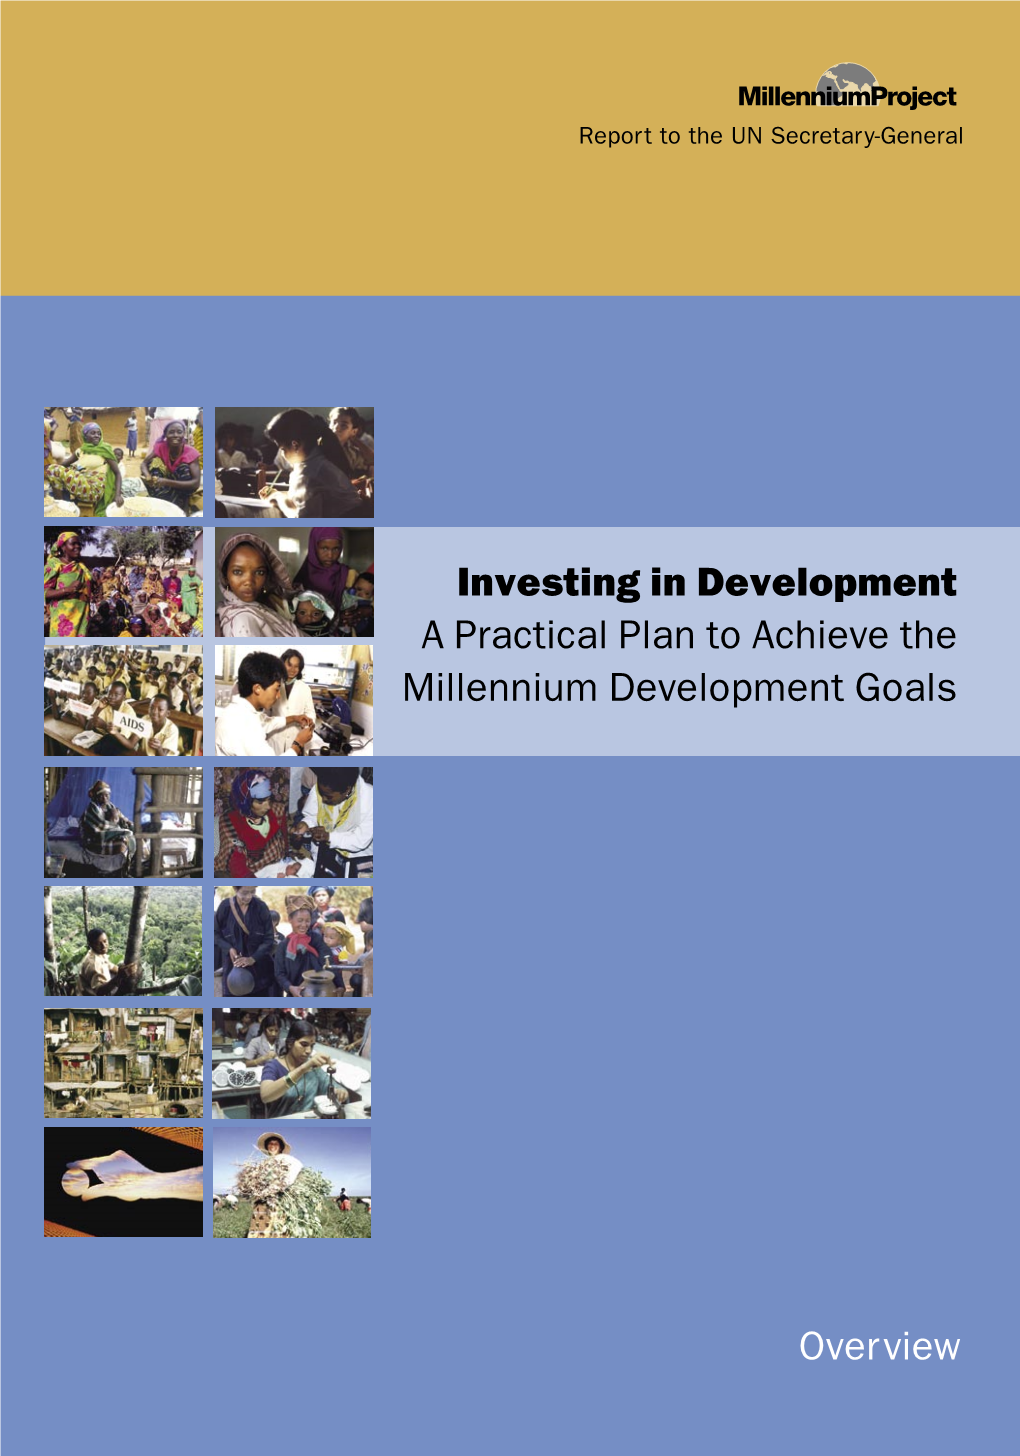 Investing in Development: a Practical Plan to Achieve the Millennium Development Goals